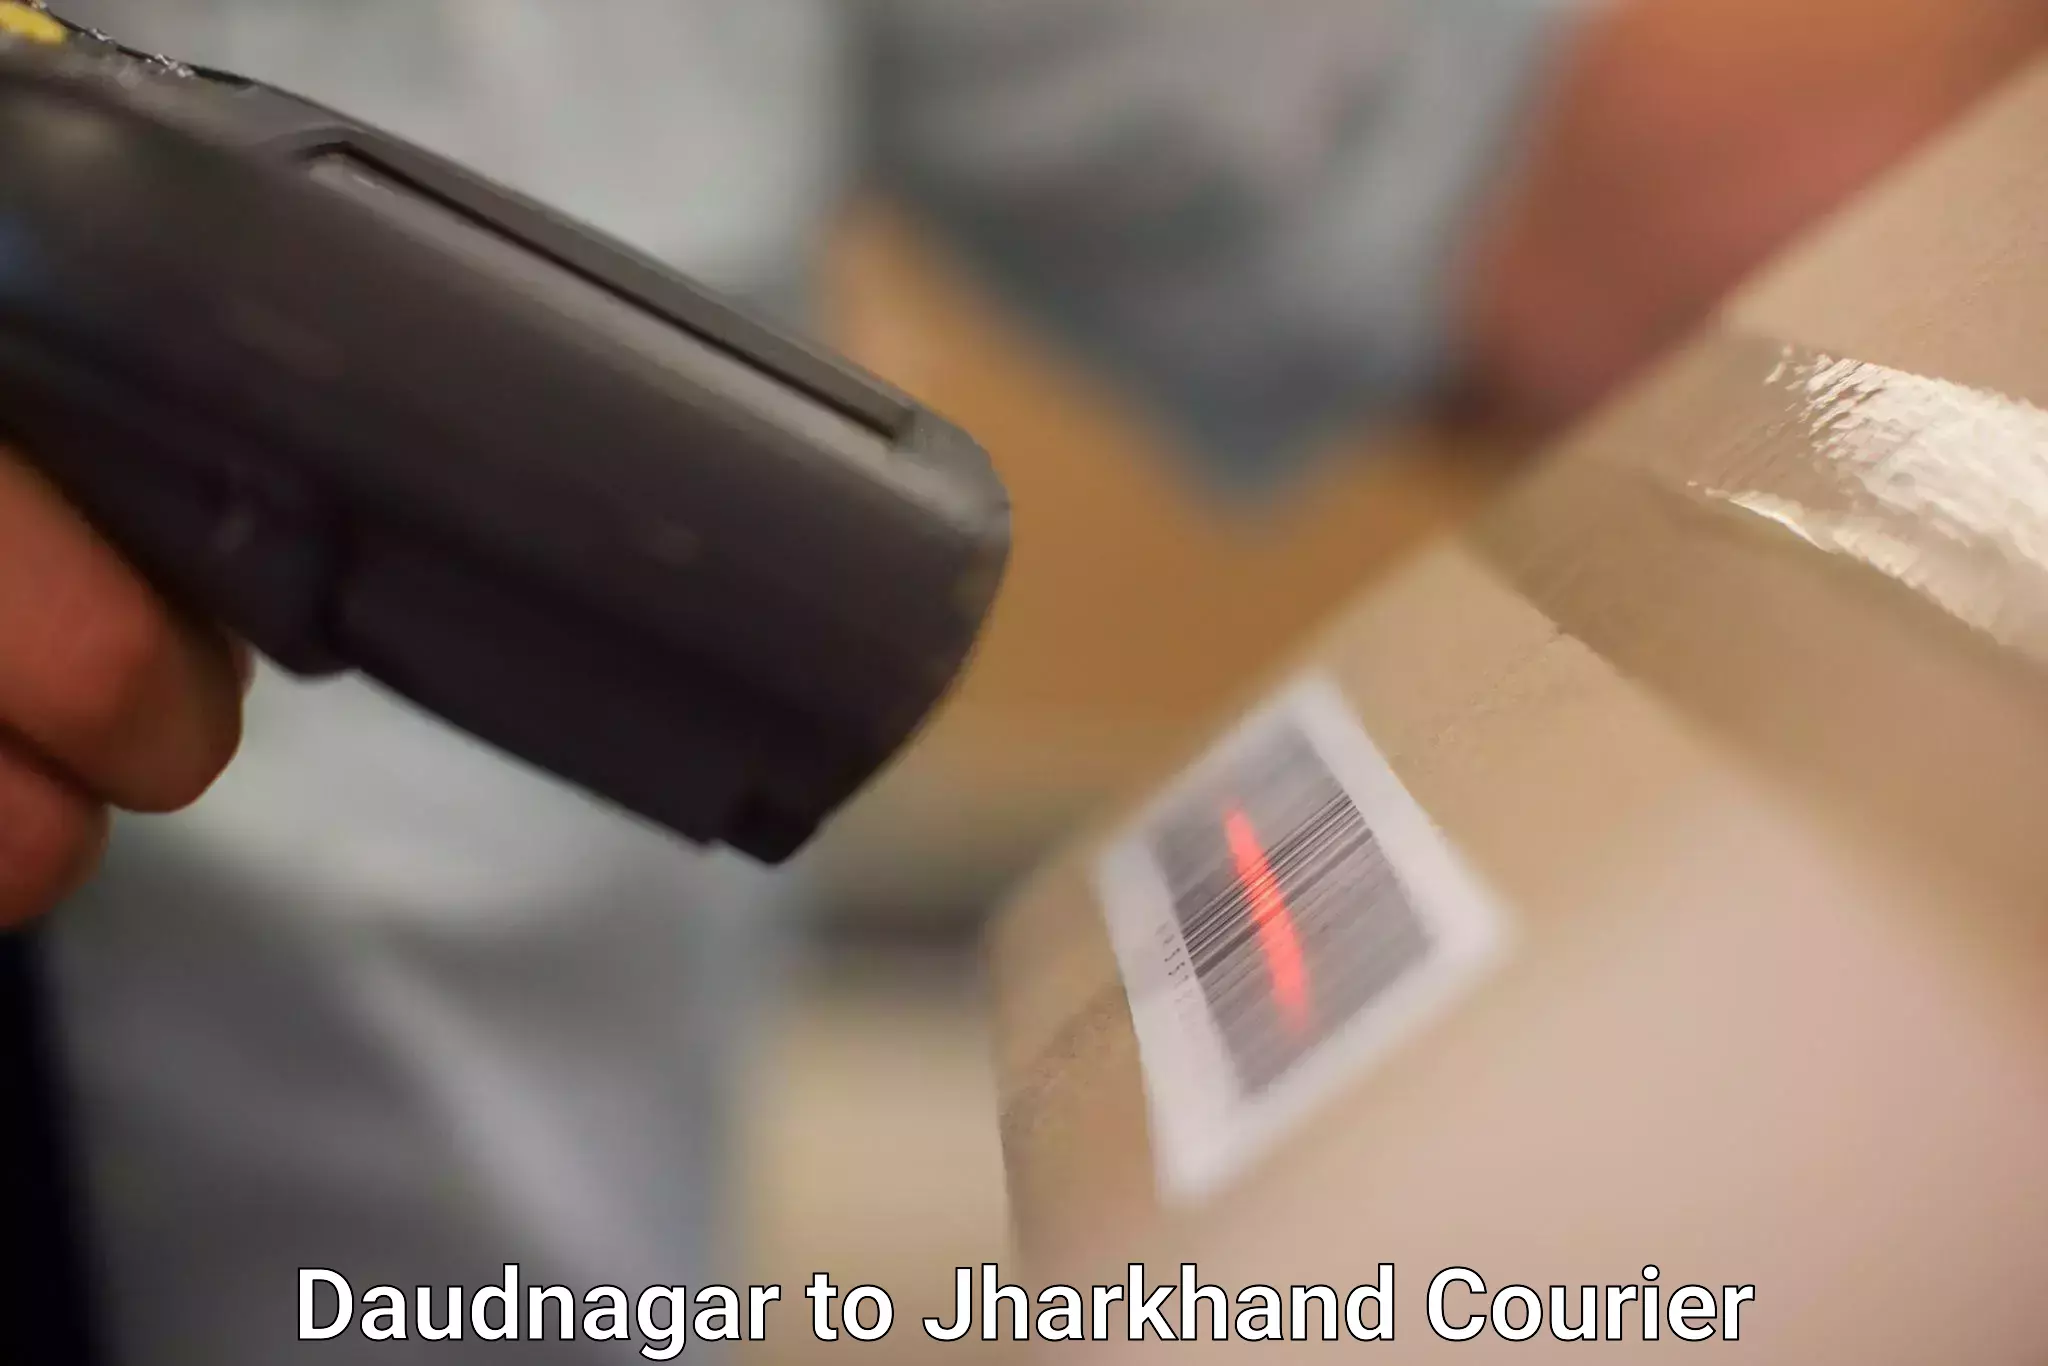 Affordable parcel service Daudnagar to Domchanch